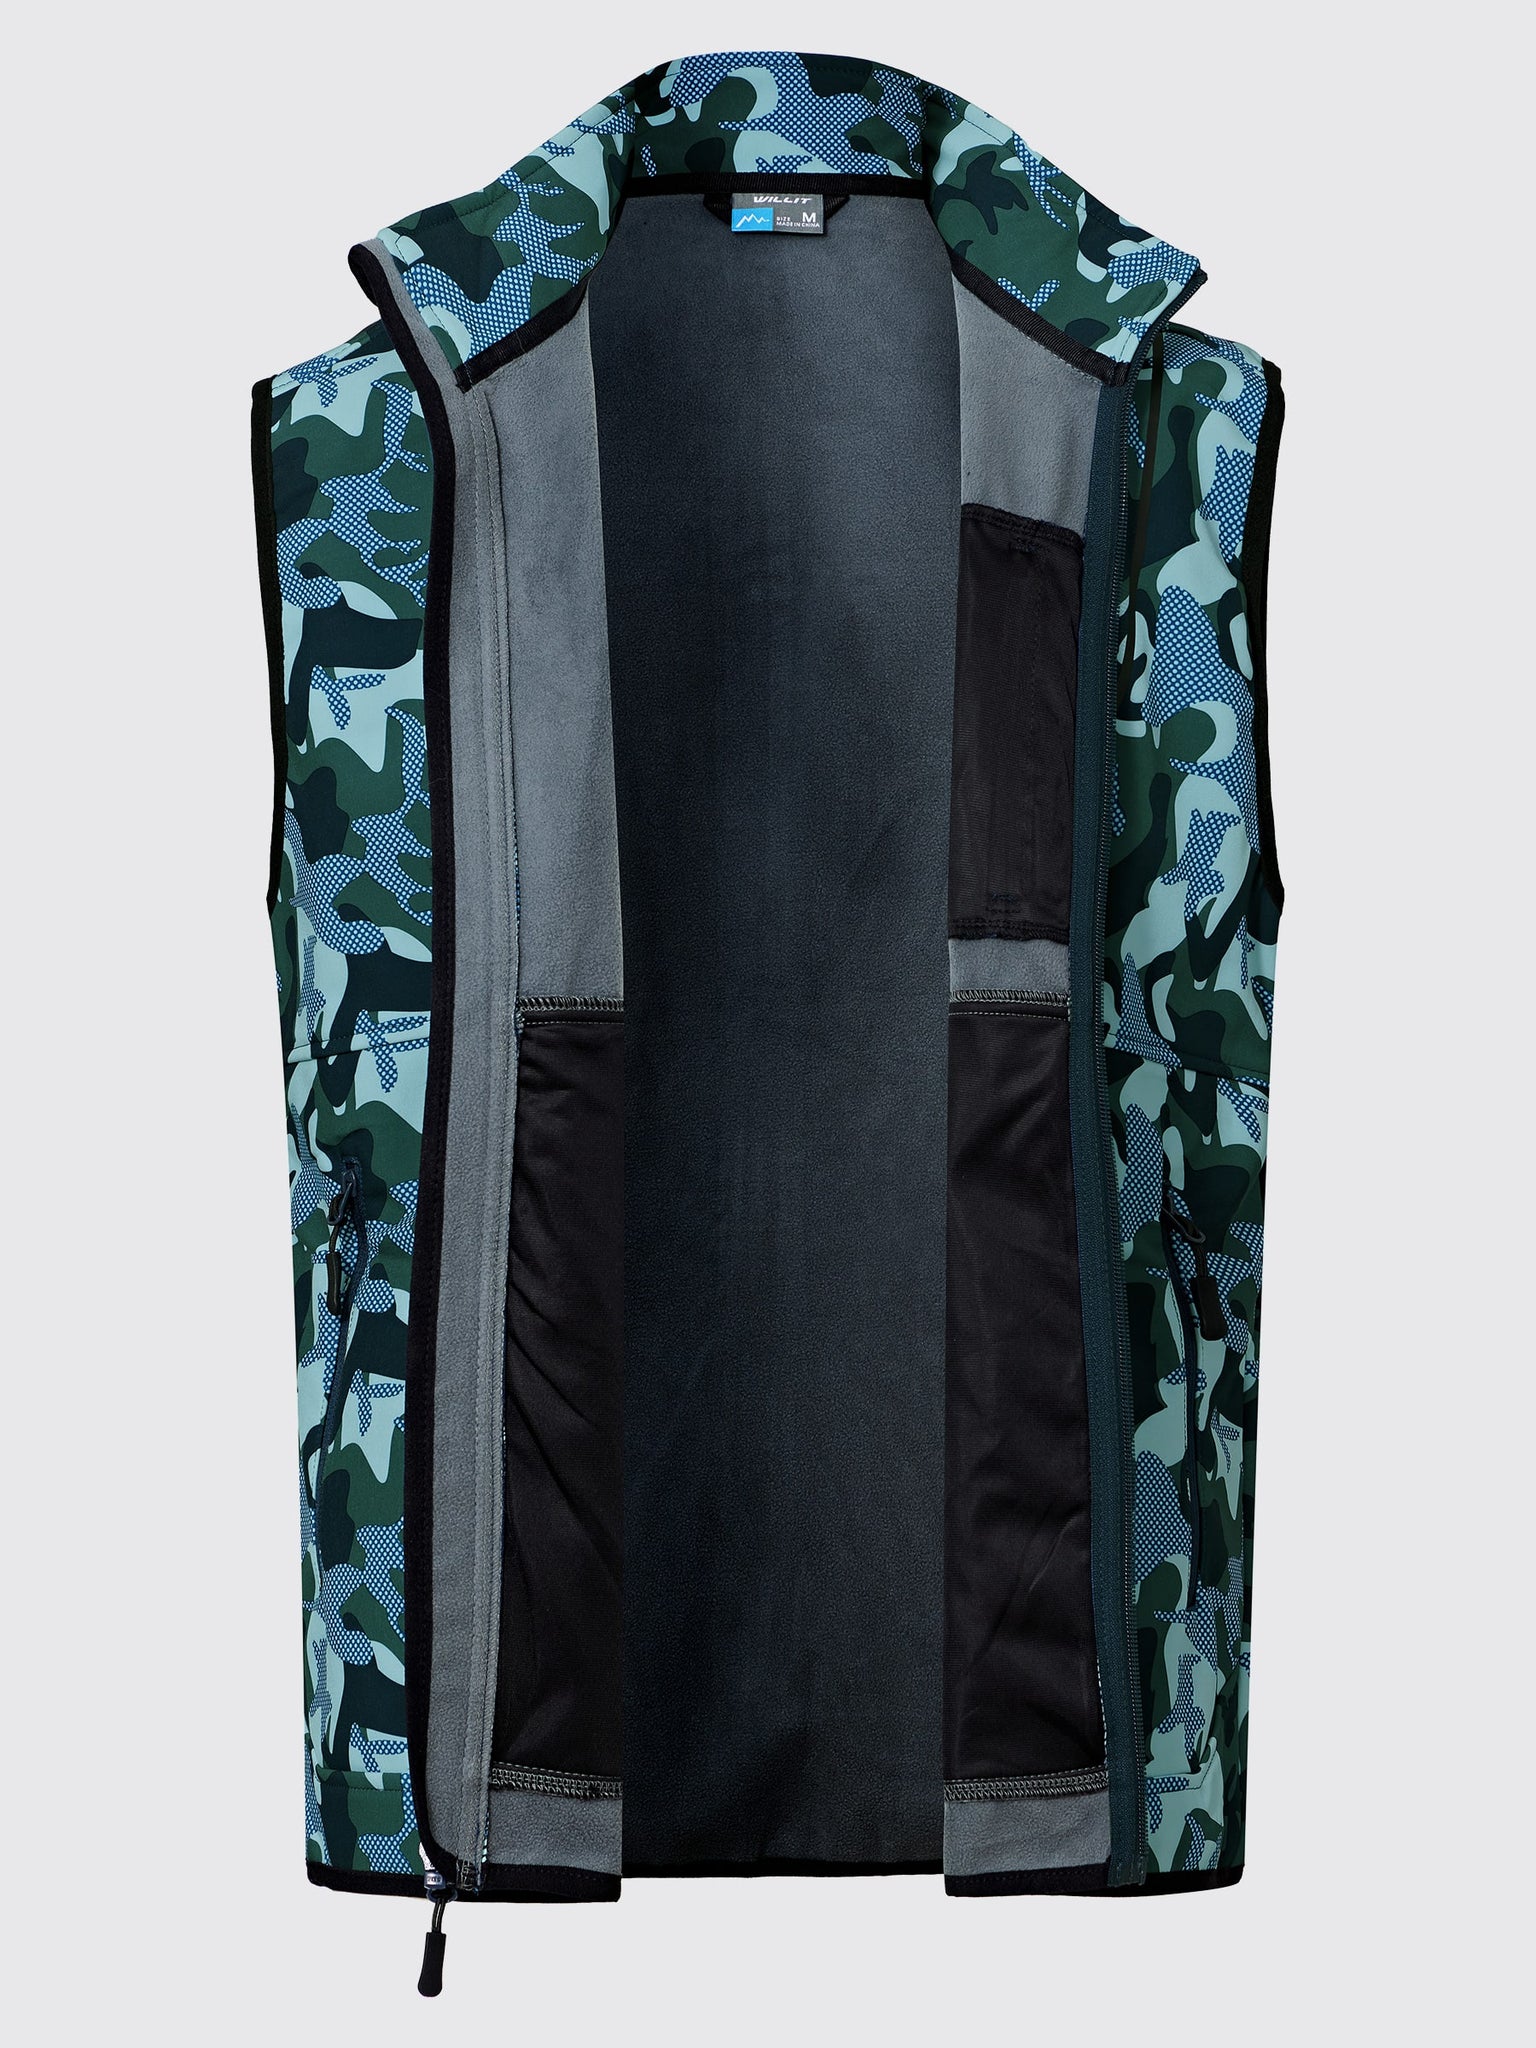 Willit Men's Softshell Vest Fleece Lined Outerwear_Camouflage3